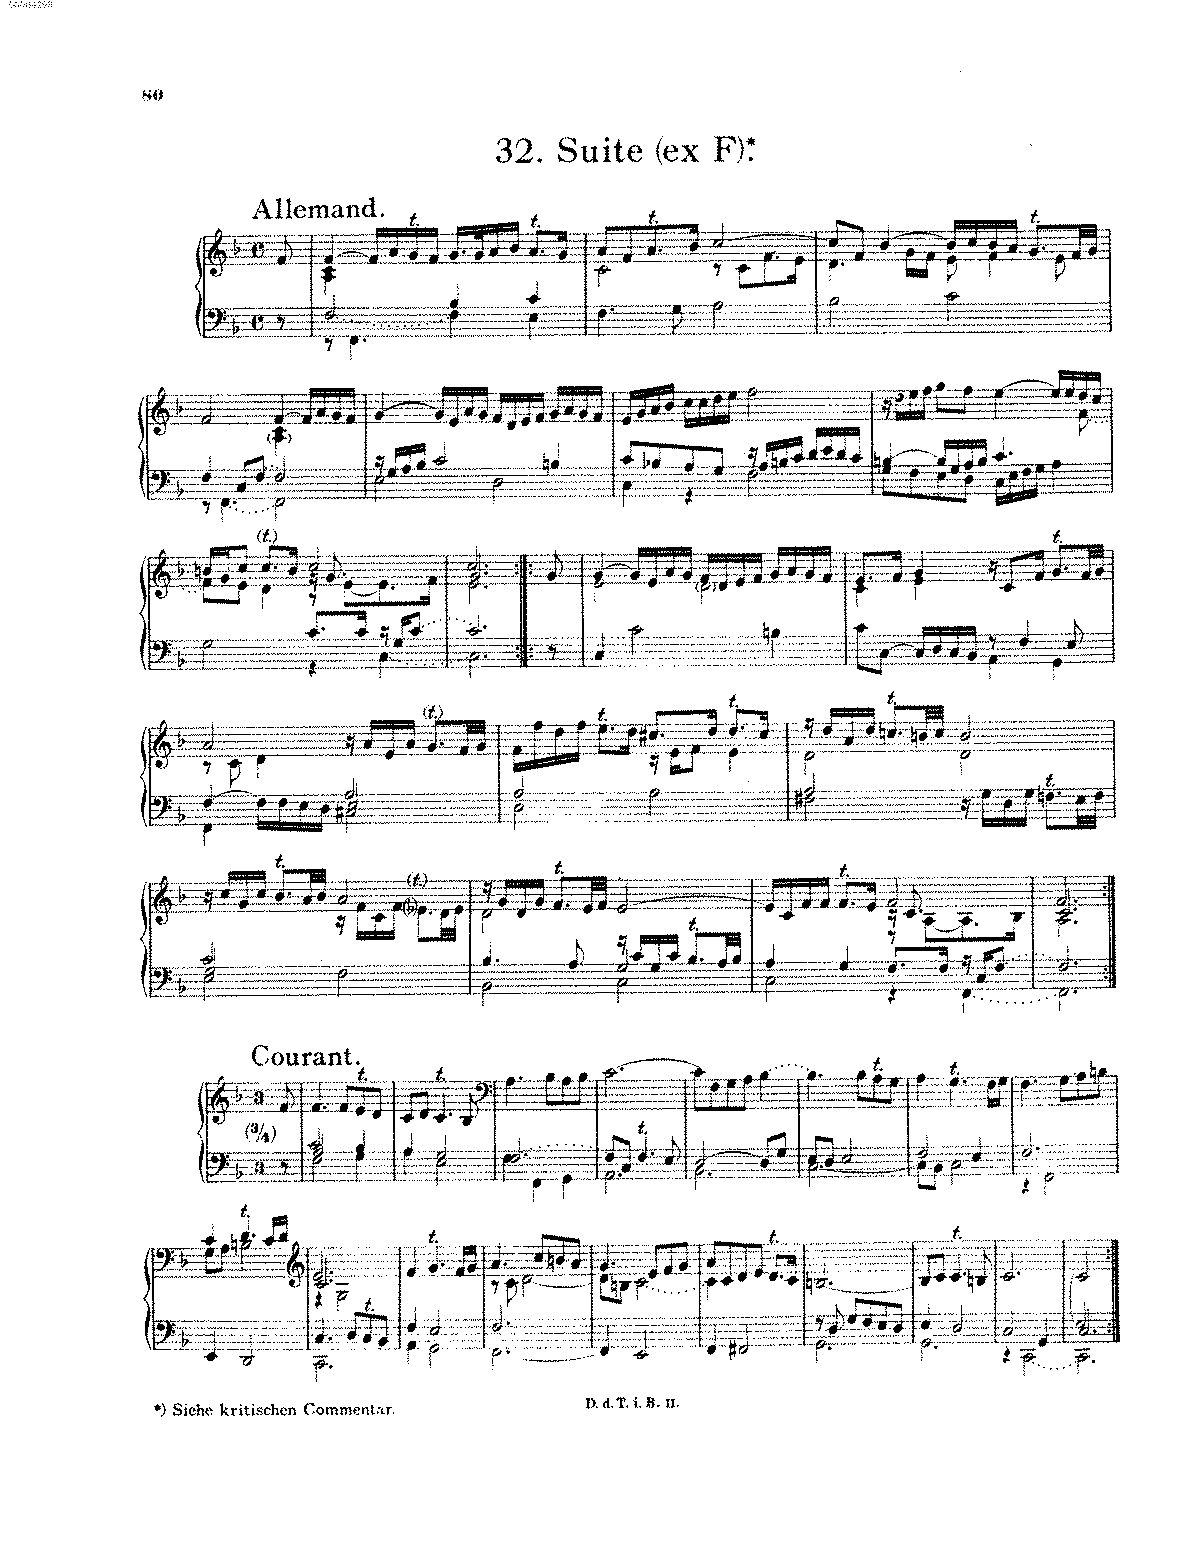 Suite in F major, P.438 (Pachelbel, Johann) - IMSLP